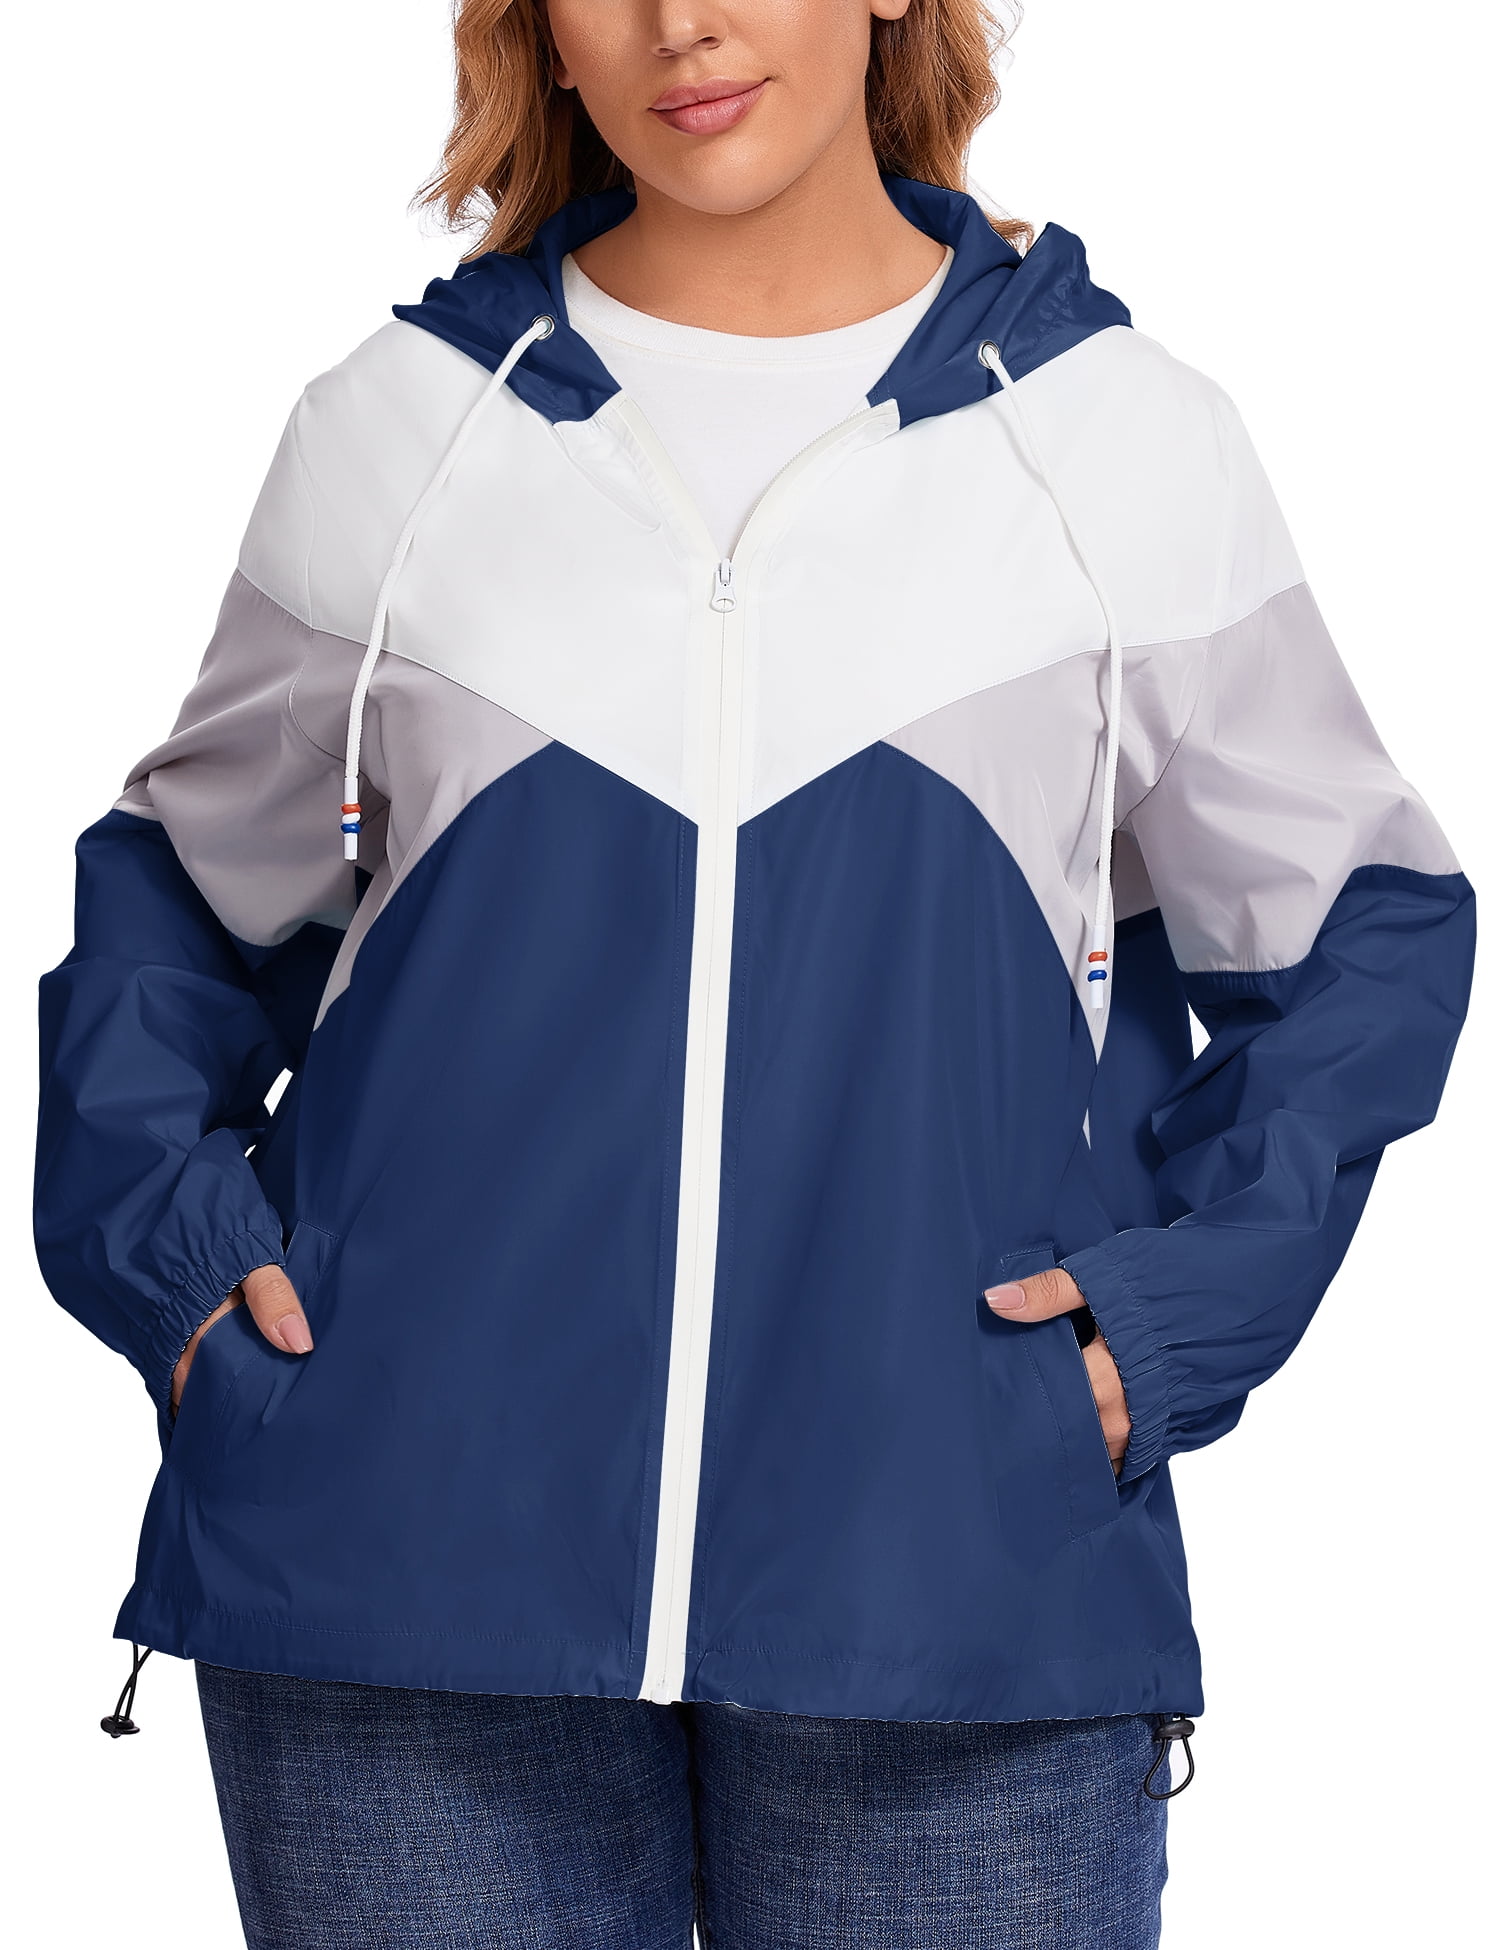 Avoogue Plus Size Raincoat Women Waterproof Rain Jacket Packable Outdoor Hooded Windbreaker 